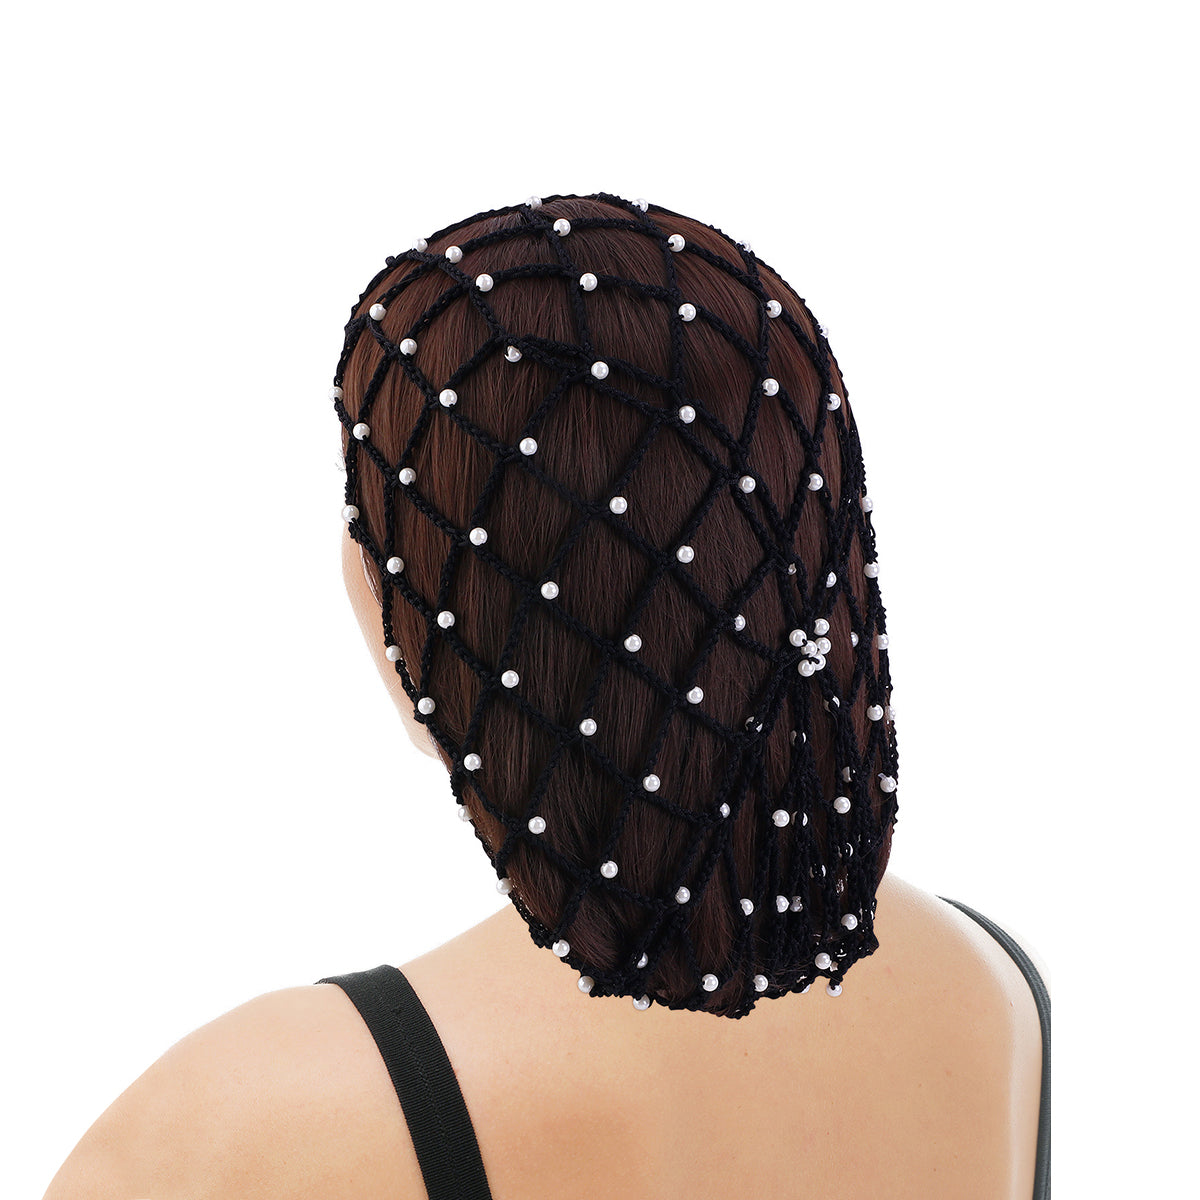 New pearl Hair Net Rayon Hair Net Crochet Hairnet Hair Wrap Mesh Net Hair Cover JDW-62